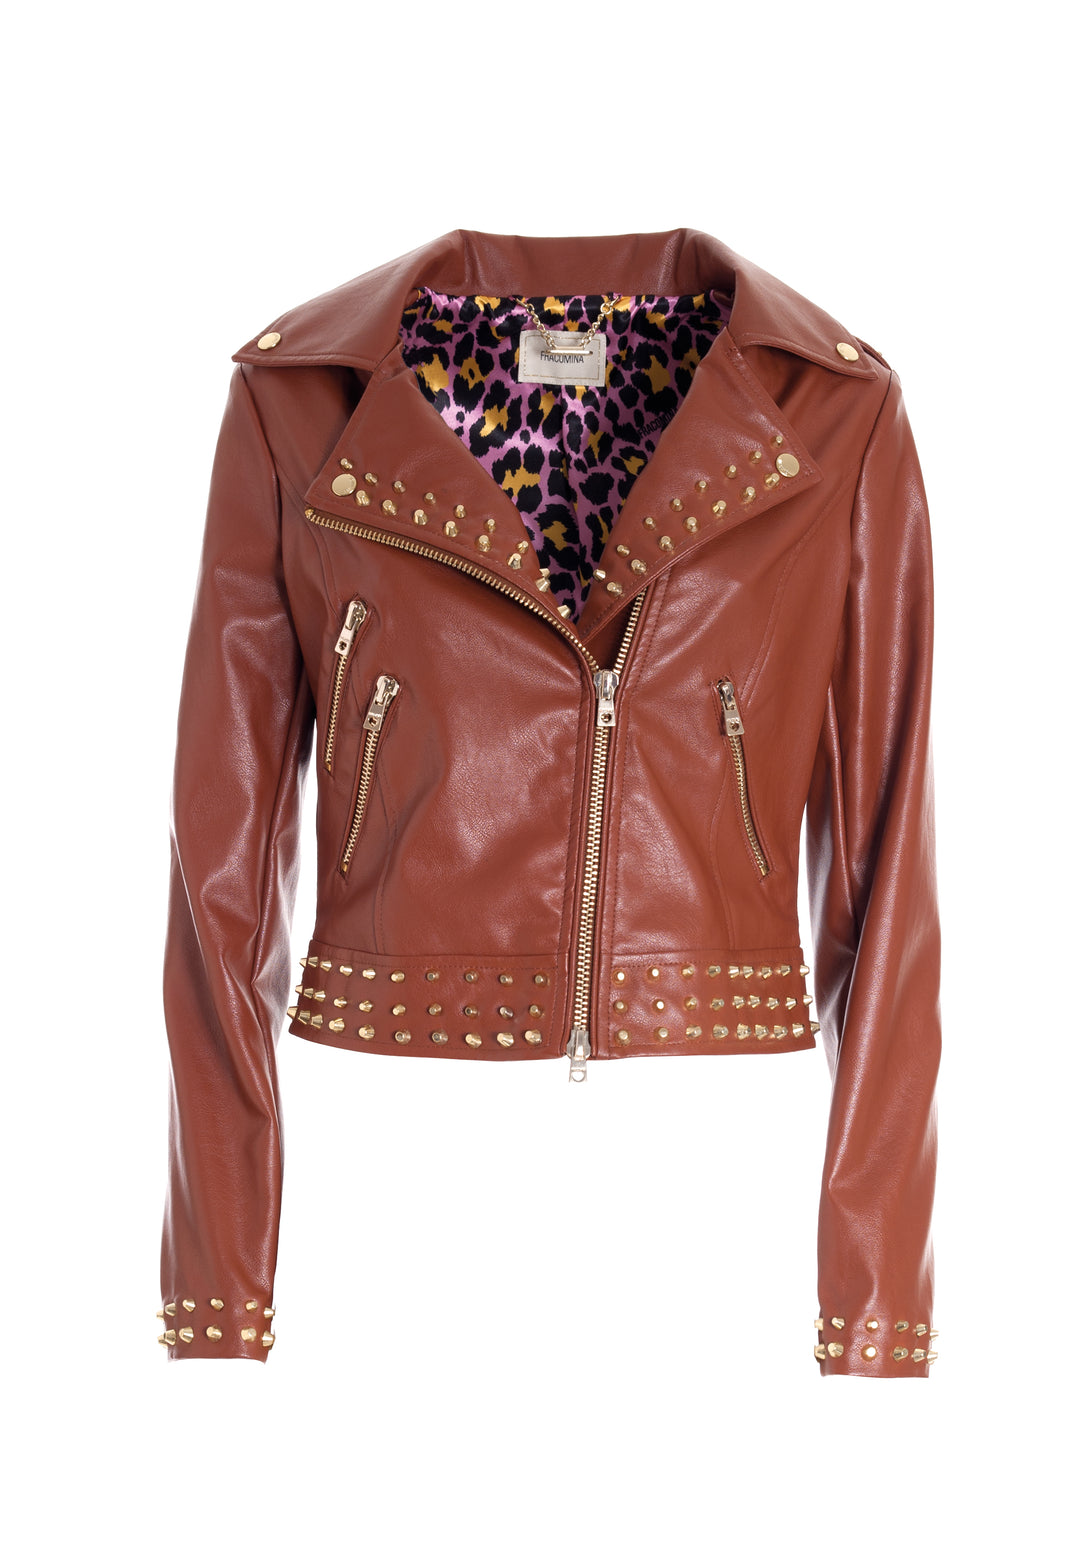 Biker jacket slim fit made in eco leather